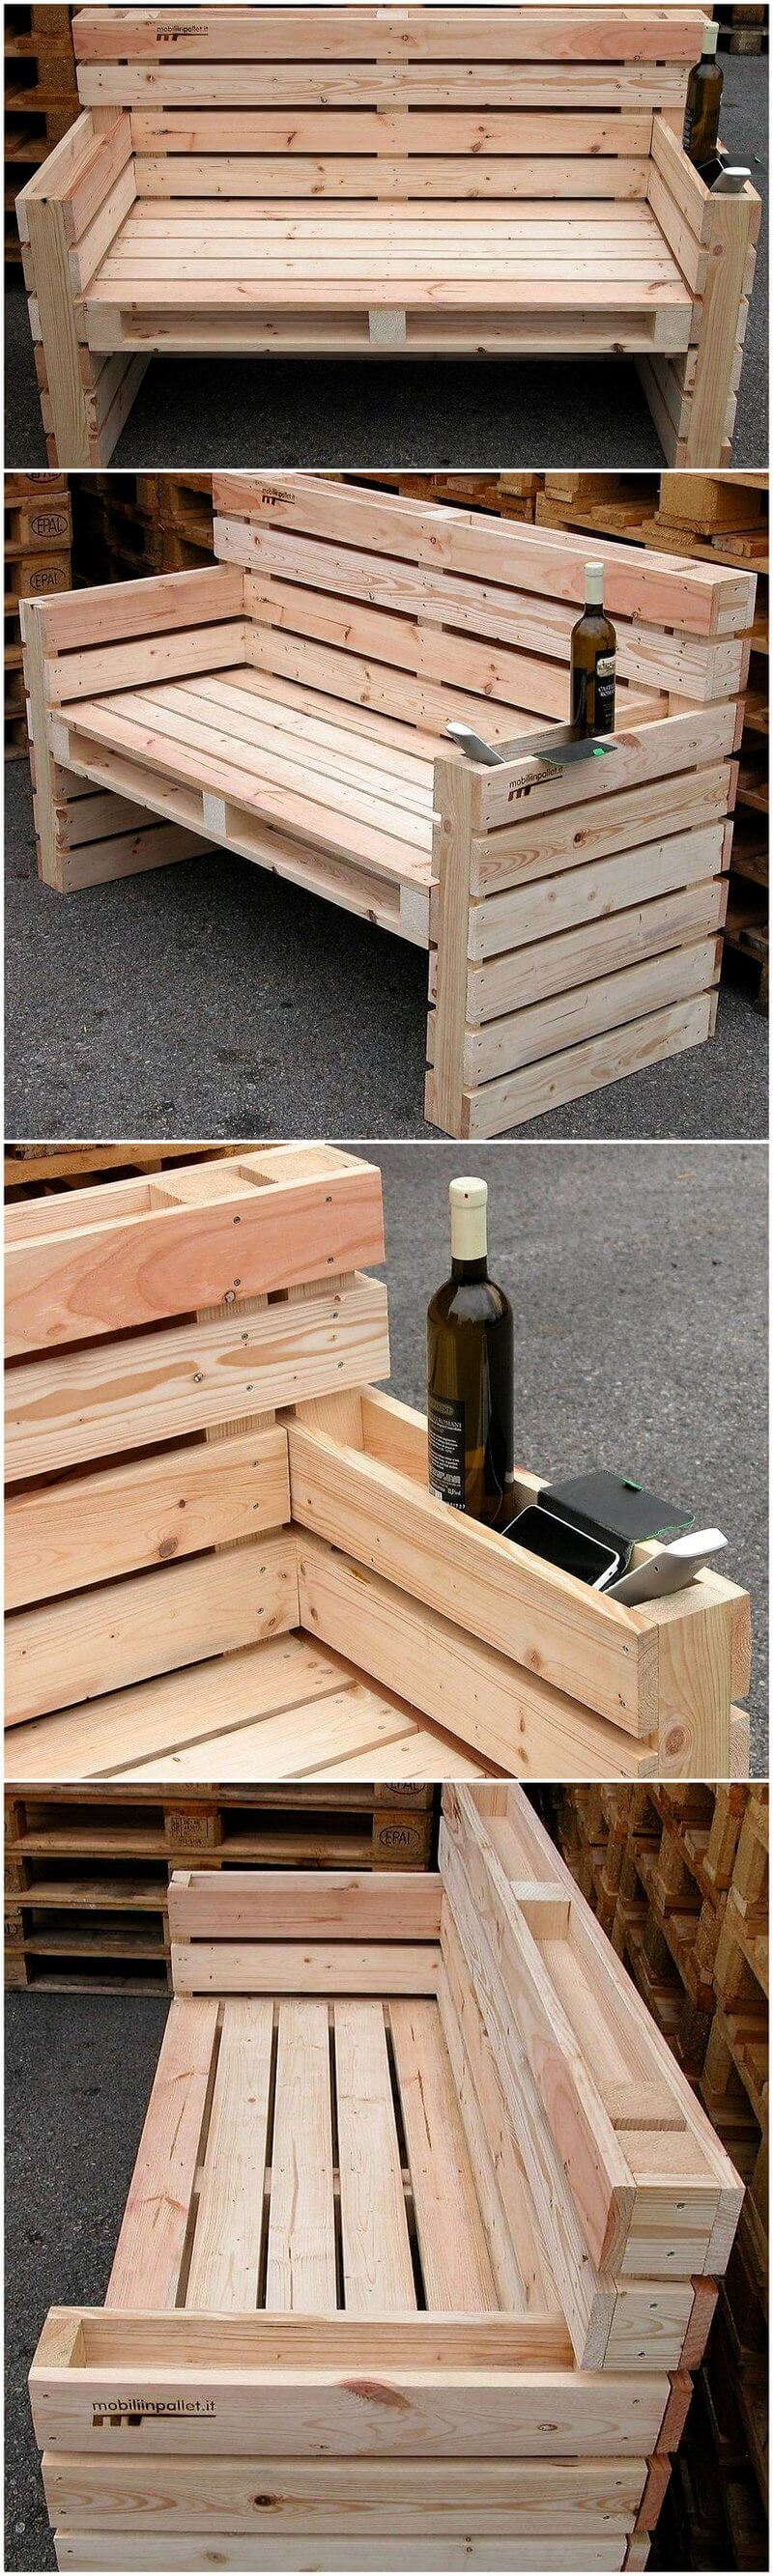 repurposed pallet wooden bench plan